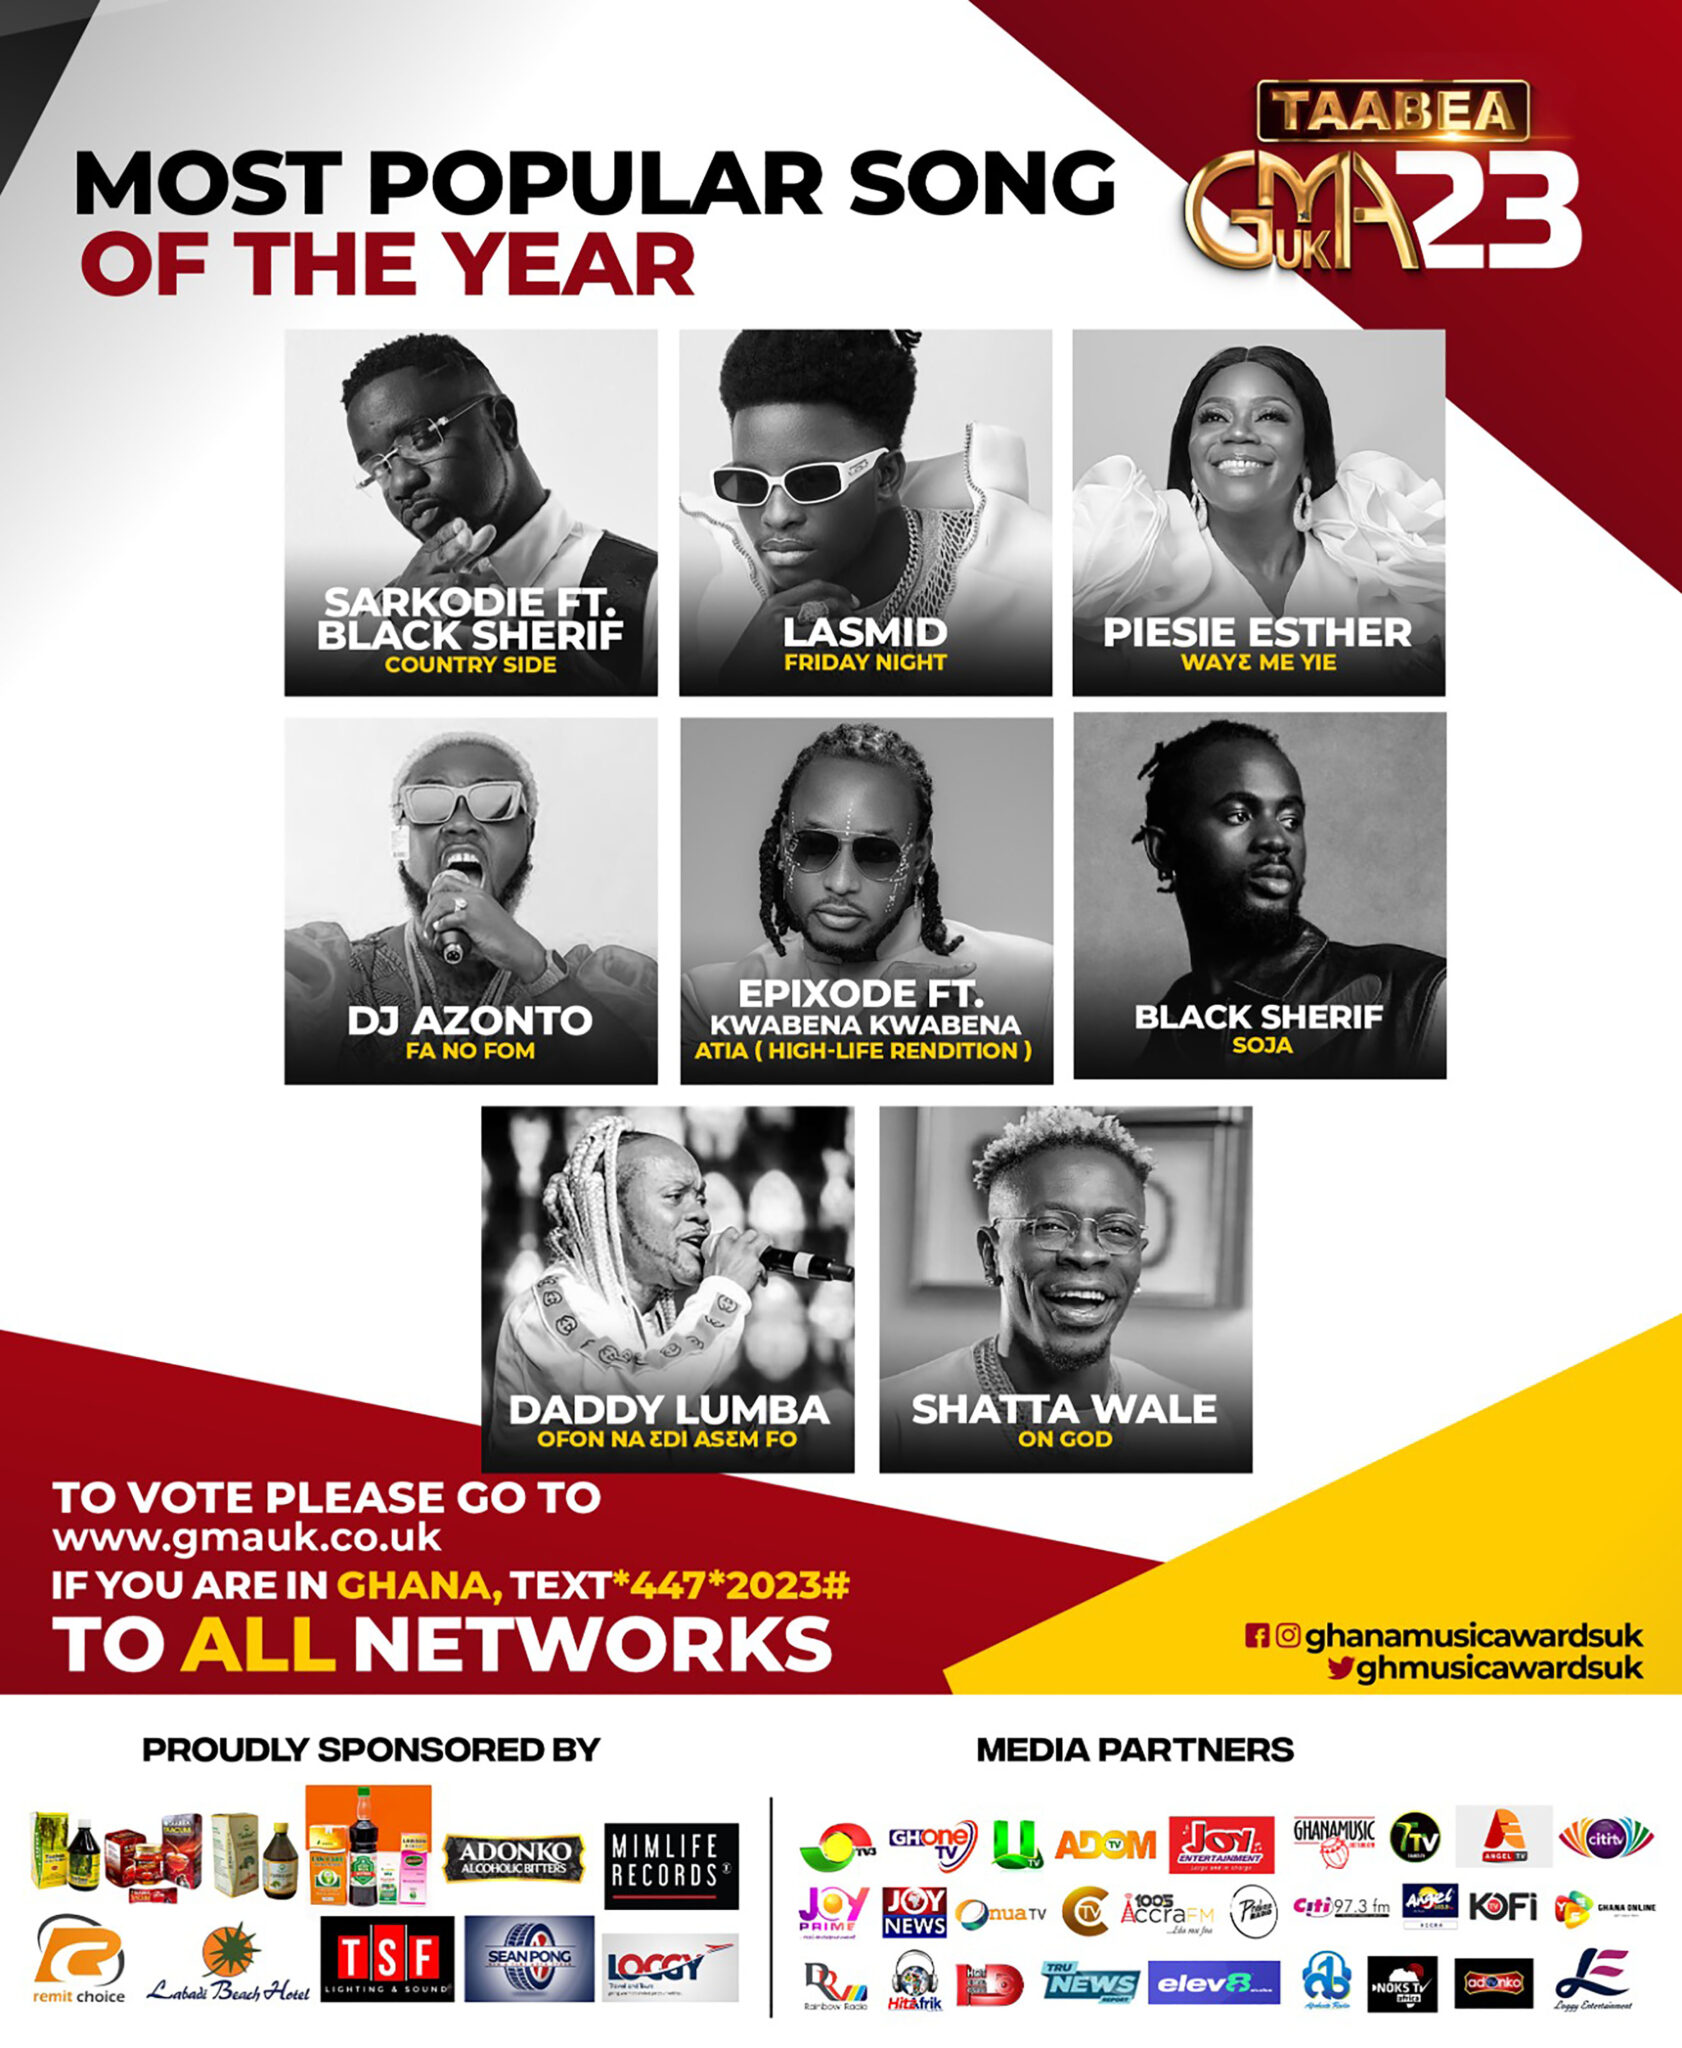 Ghana Music Awards UK announces nominees.